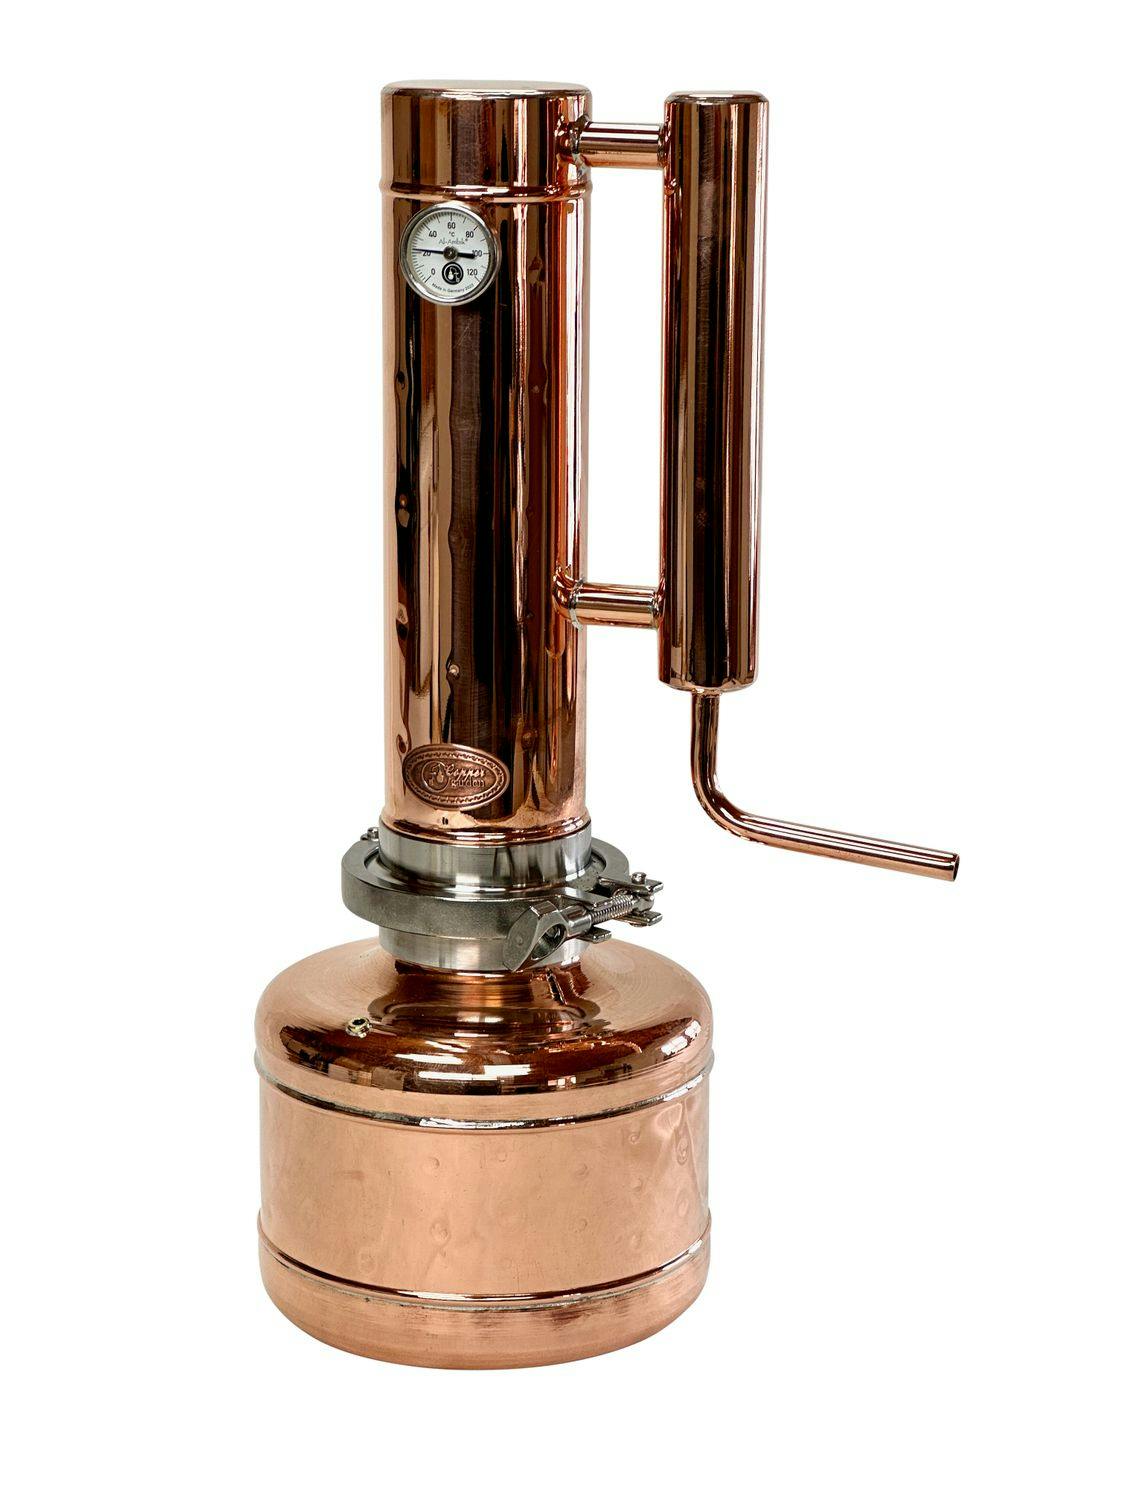 CopperGarden®` 3 Liter EASY MOONSHINE Destille XL Thermometer